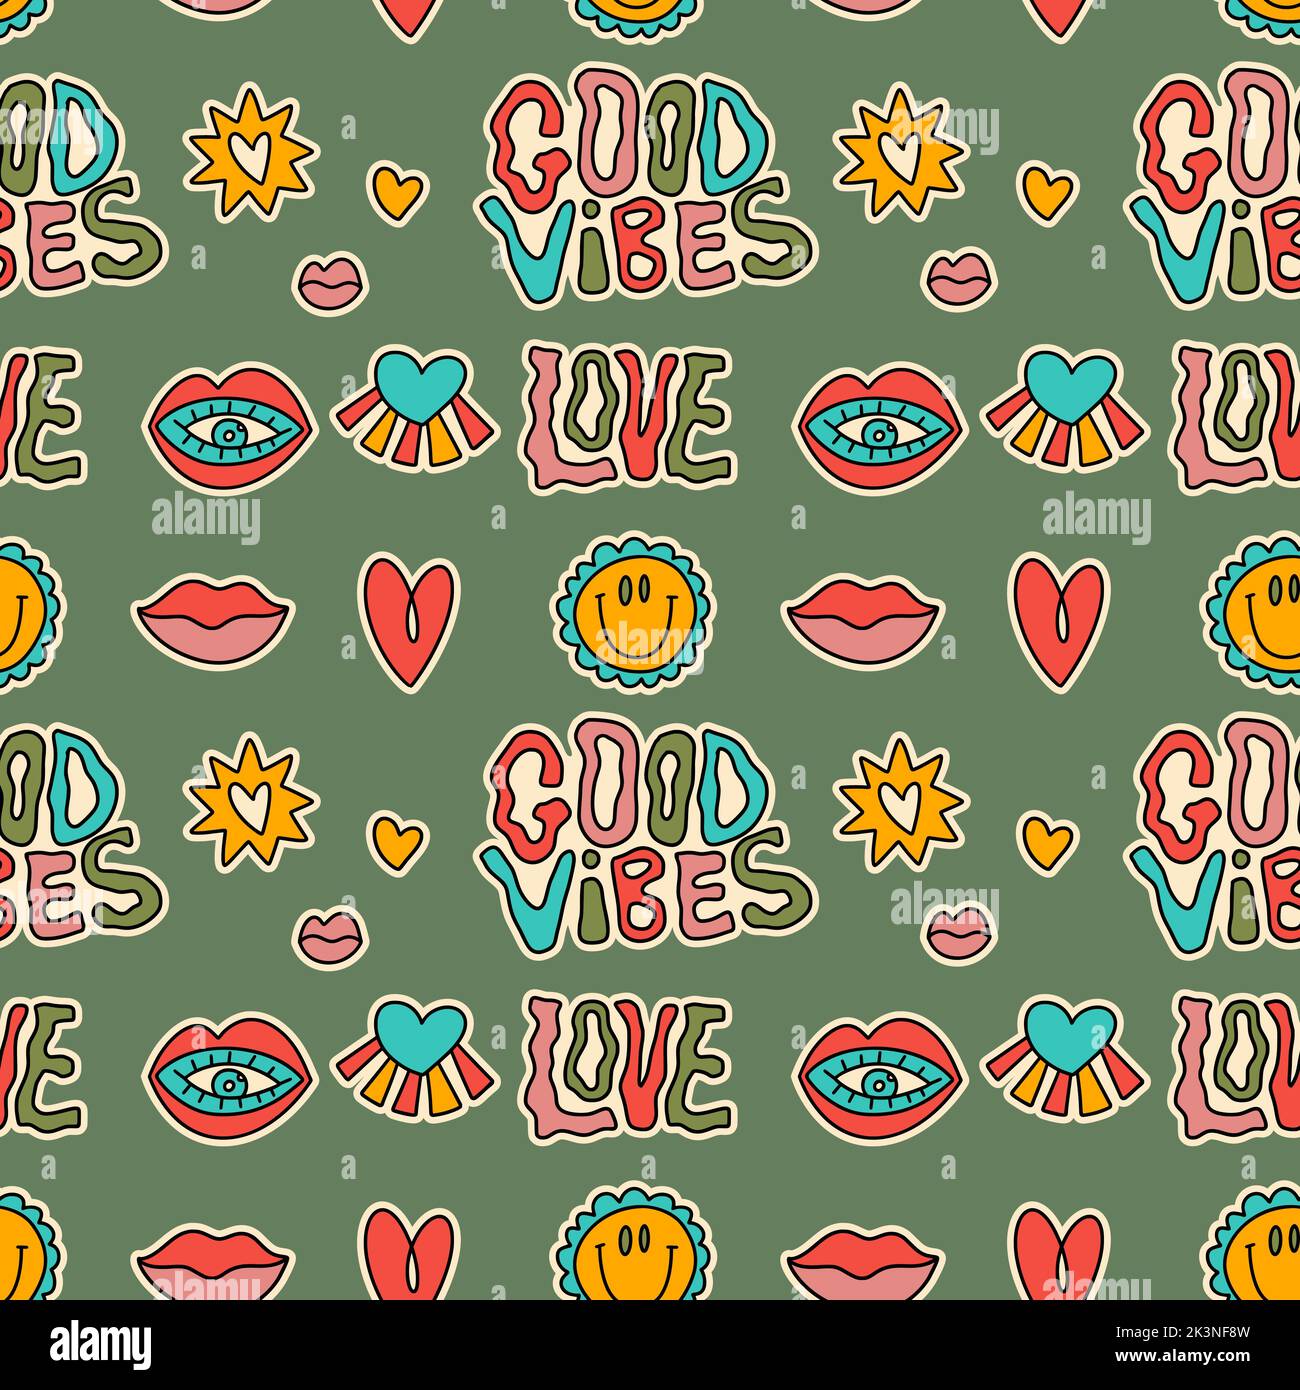 Cute cartoon groovy sticker good vibes vector seamless pattern. Hippie retro background illustration Stock Vector